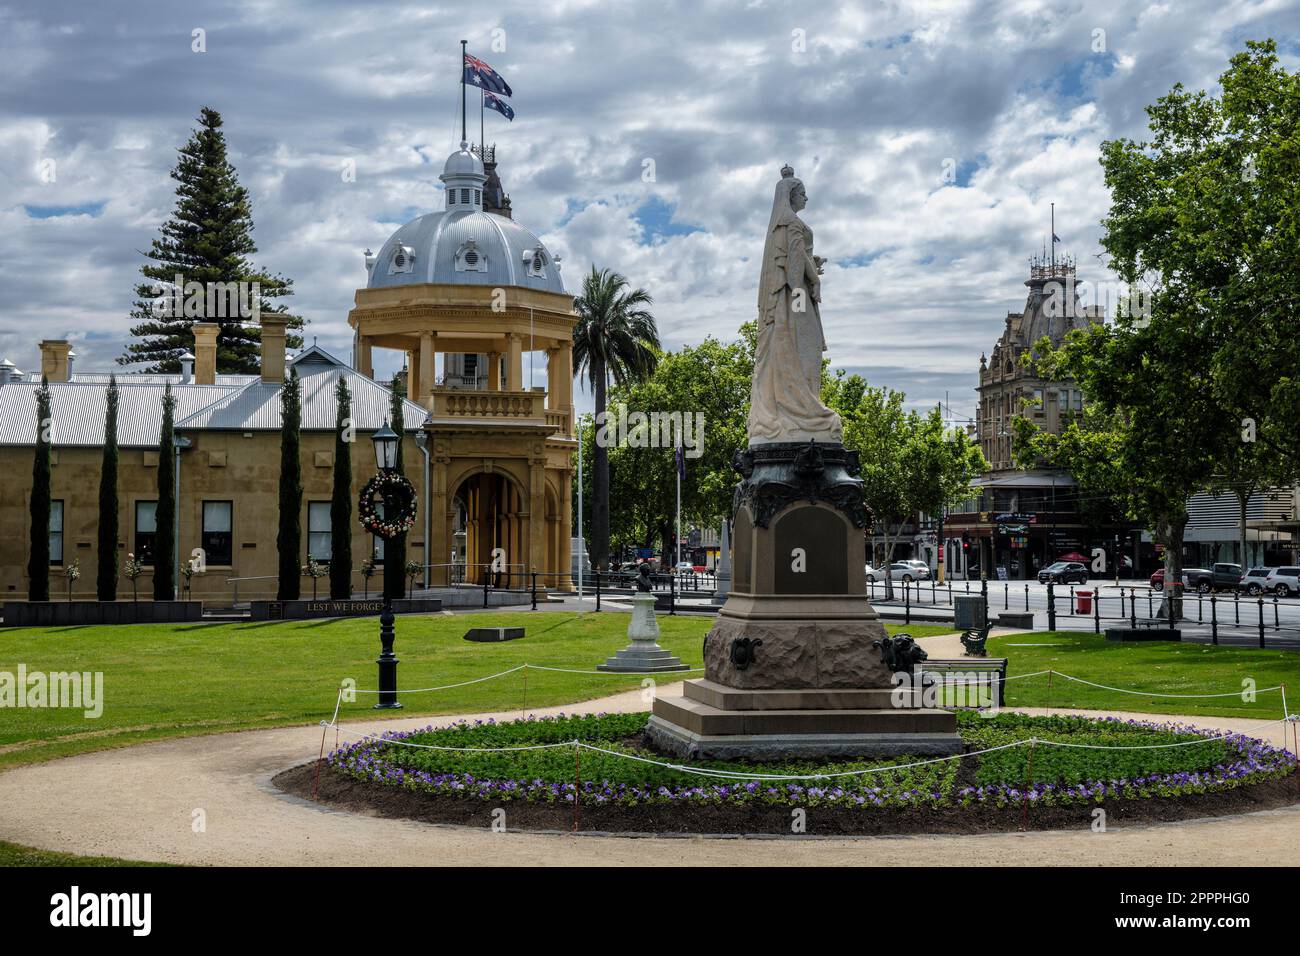 Queen Victoria statue in Queen's Gardens and the Bendigo Military Museum, Bendigo, Victoria, Australia Stock Photo